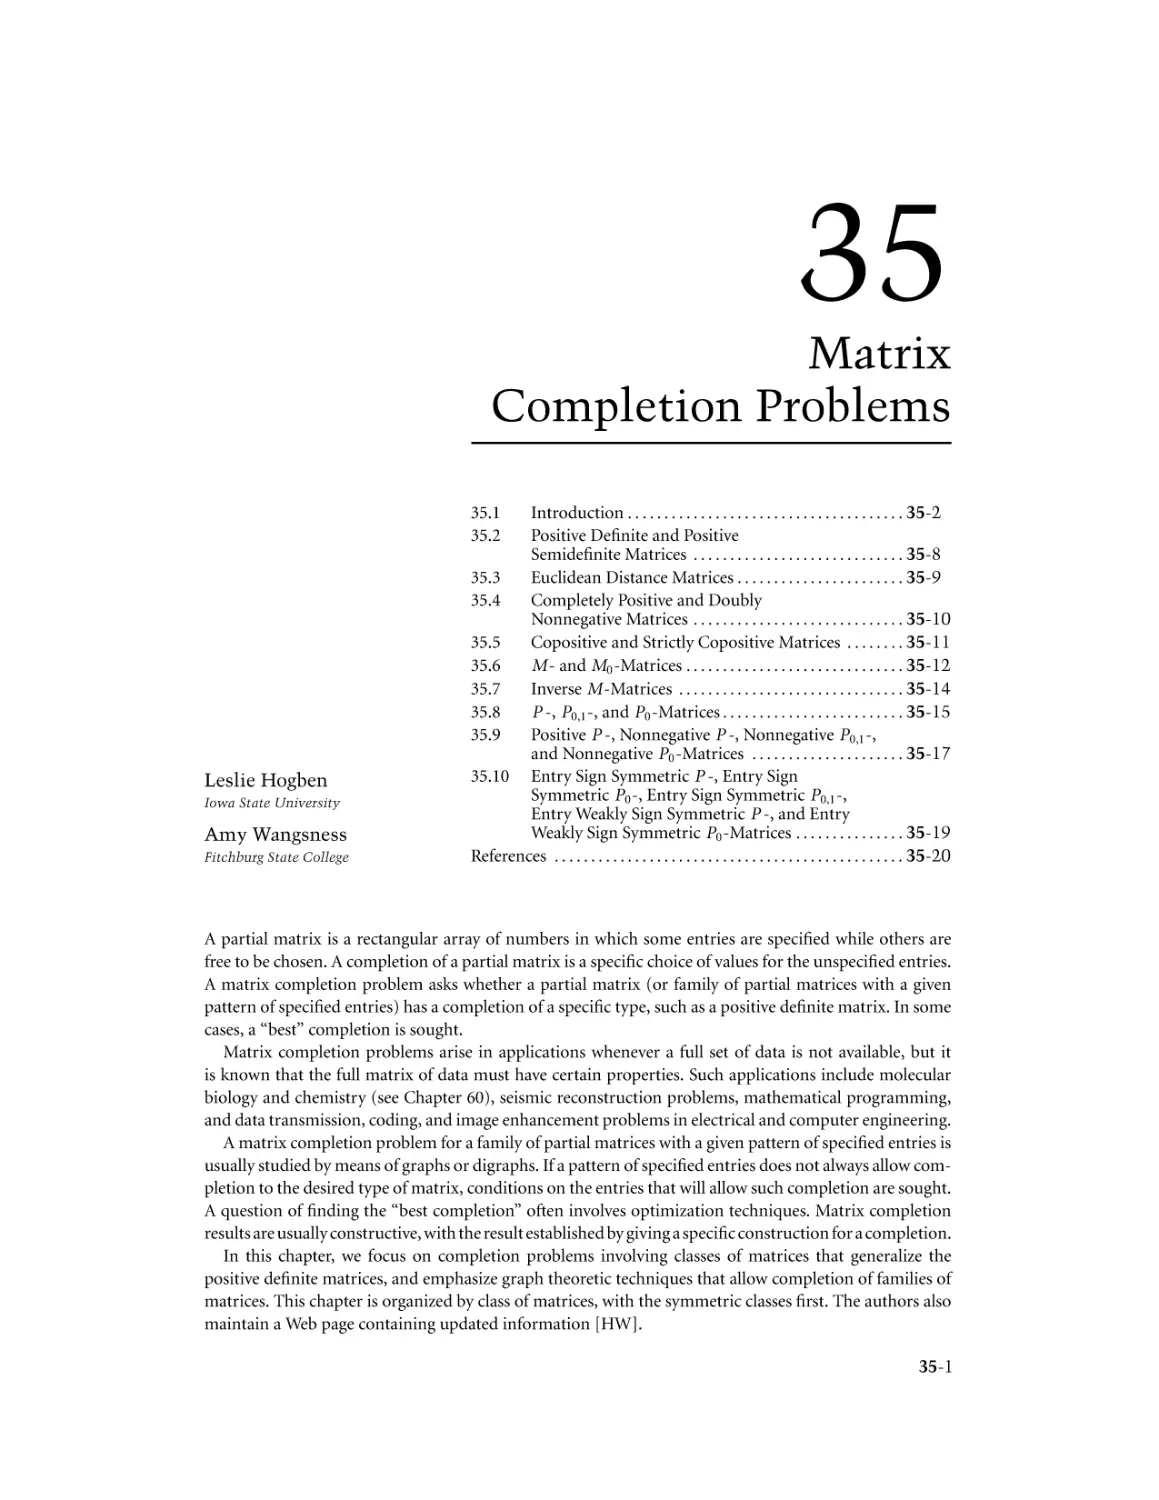 Chapter 35. Matrix Completion Problems